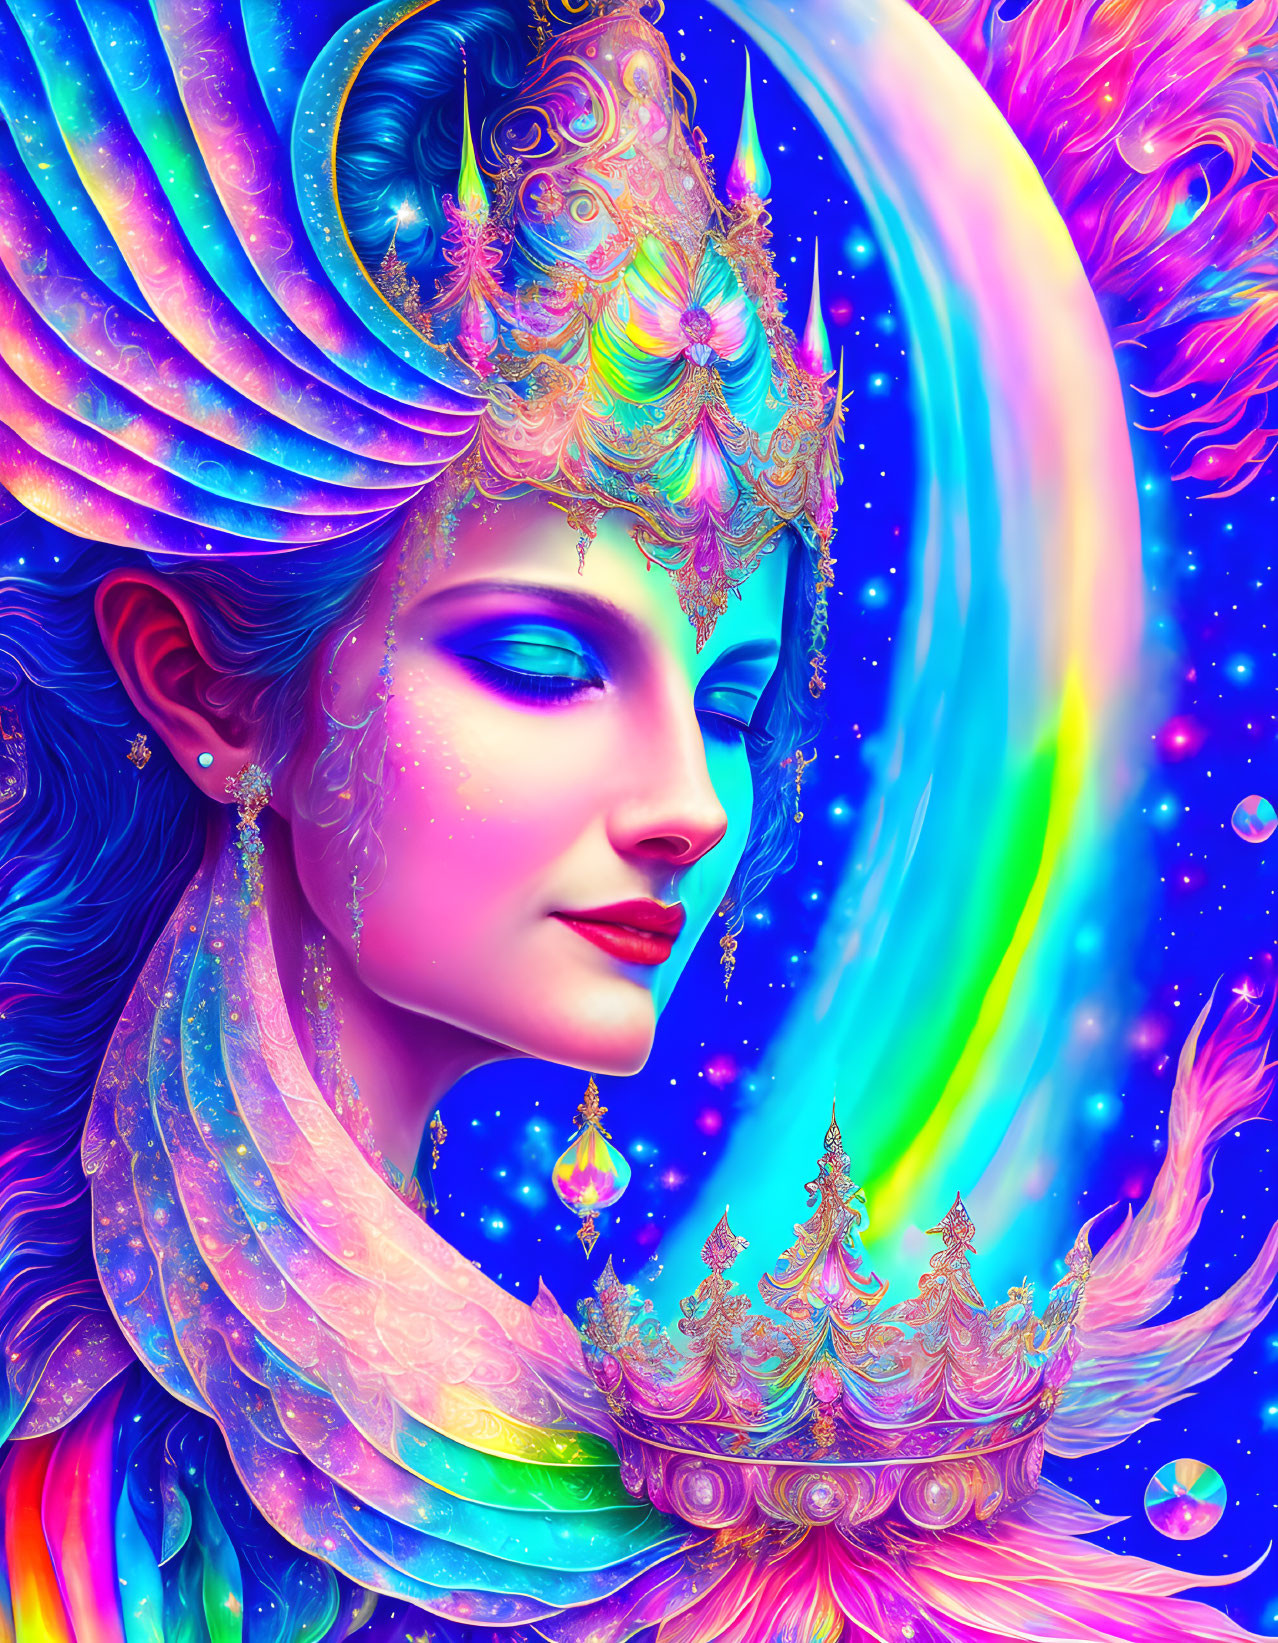 The goddess of rainbows 